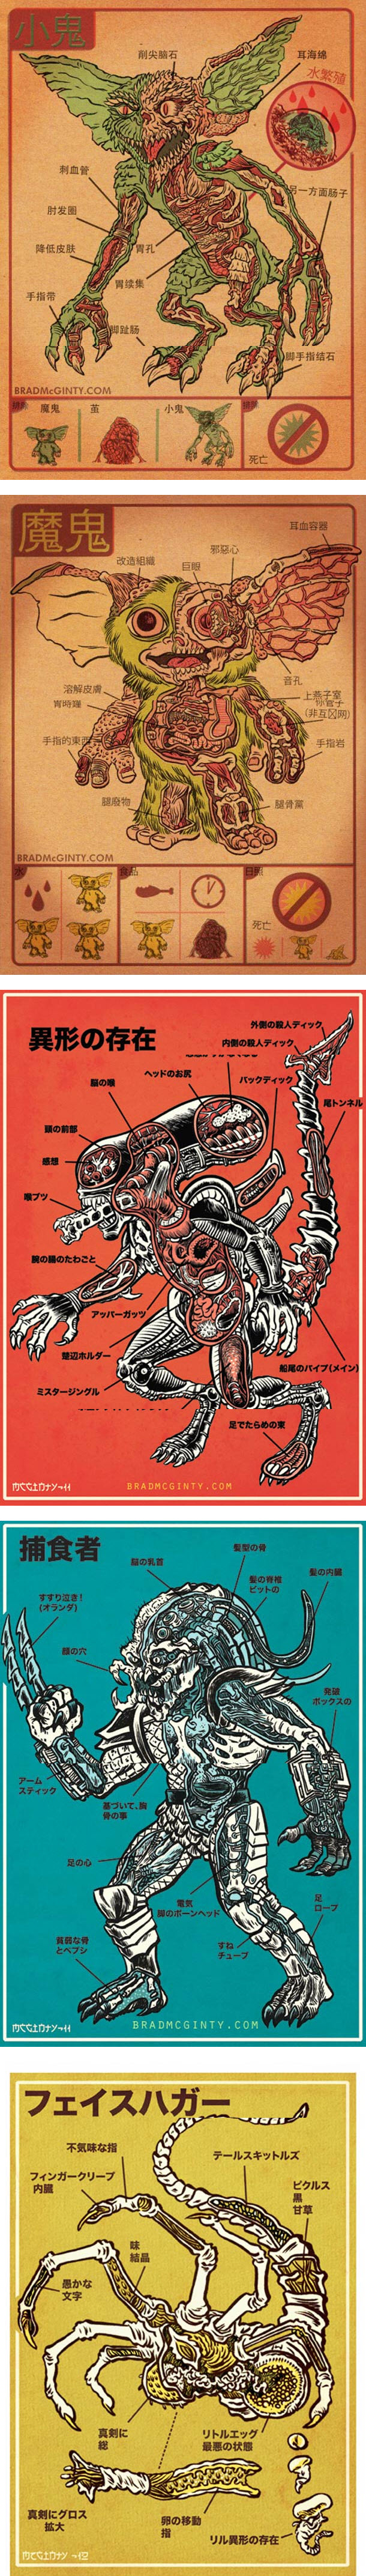 L’anatomie des monstres 01.jpg